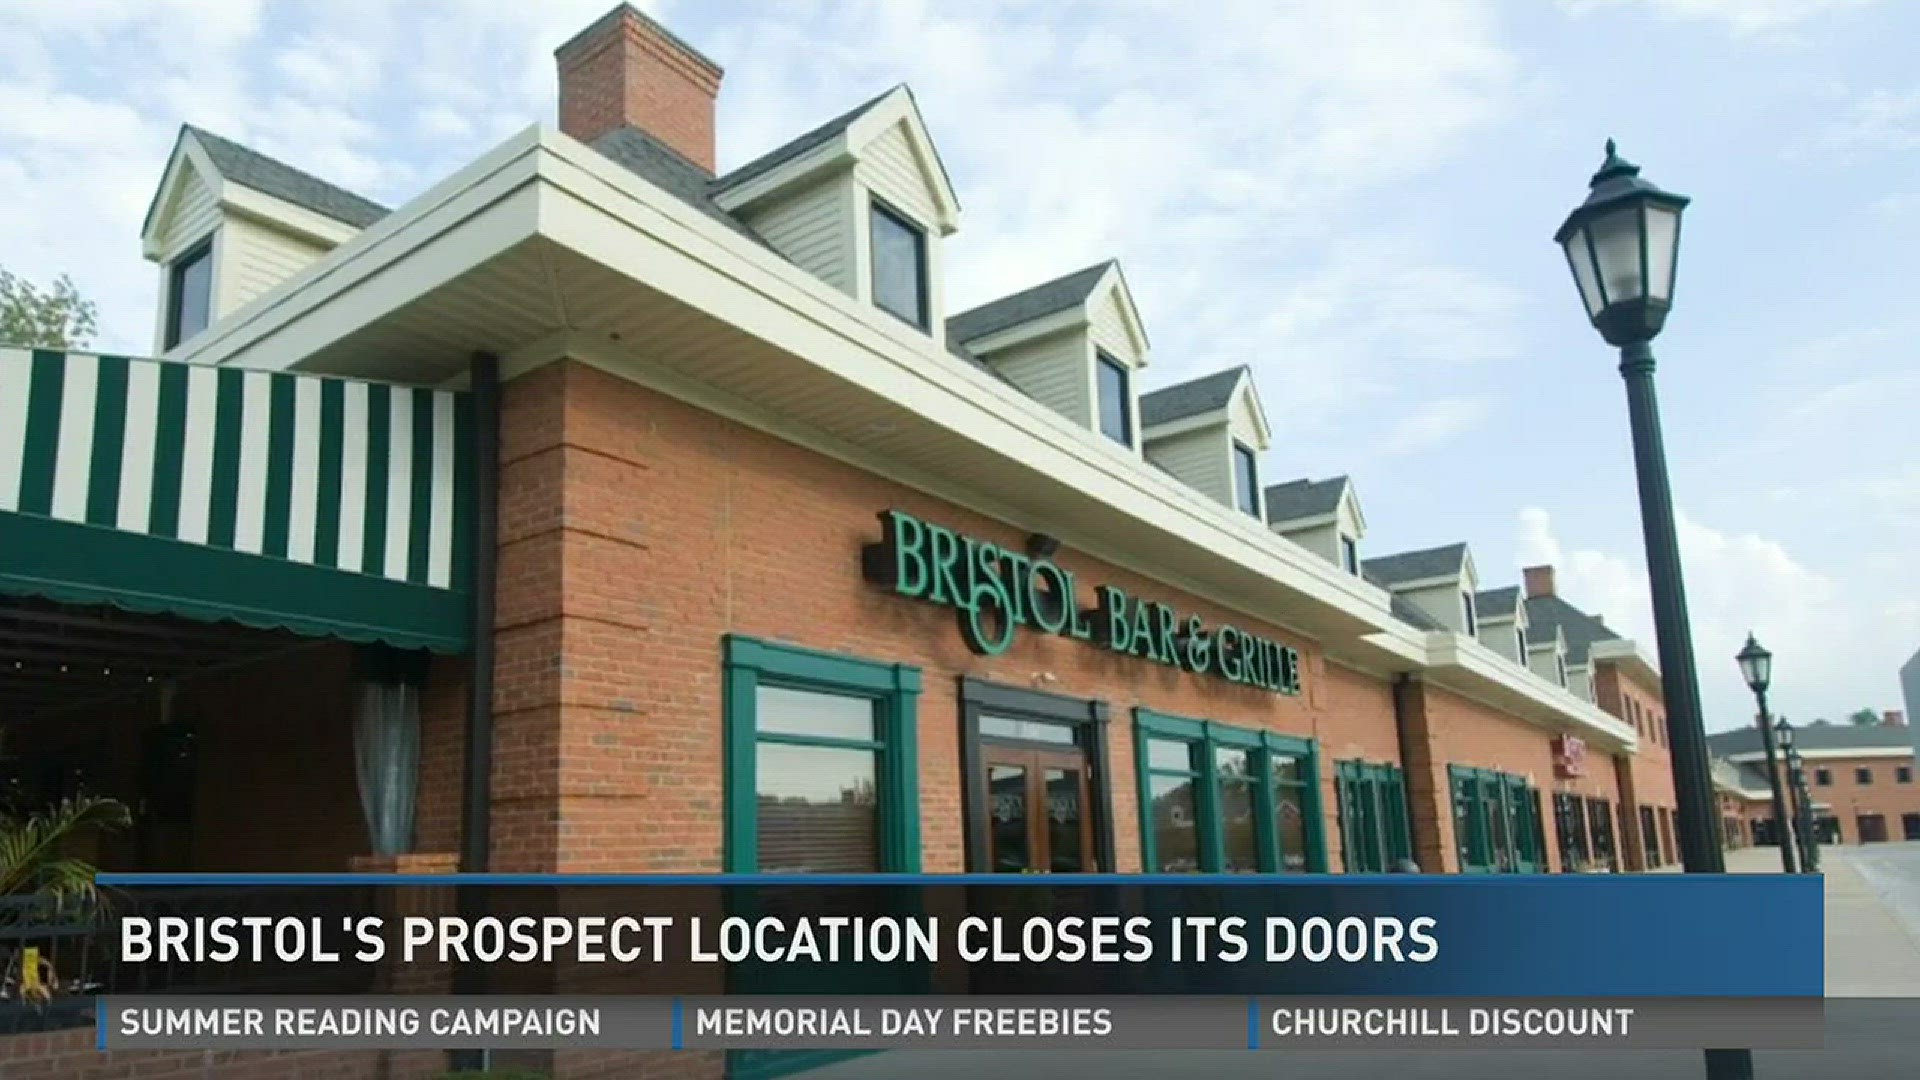 Bristol Bar and Grill Prospect location closing